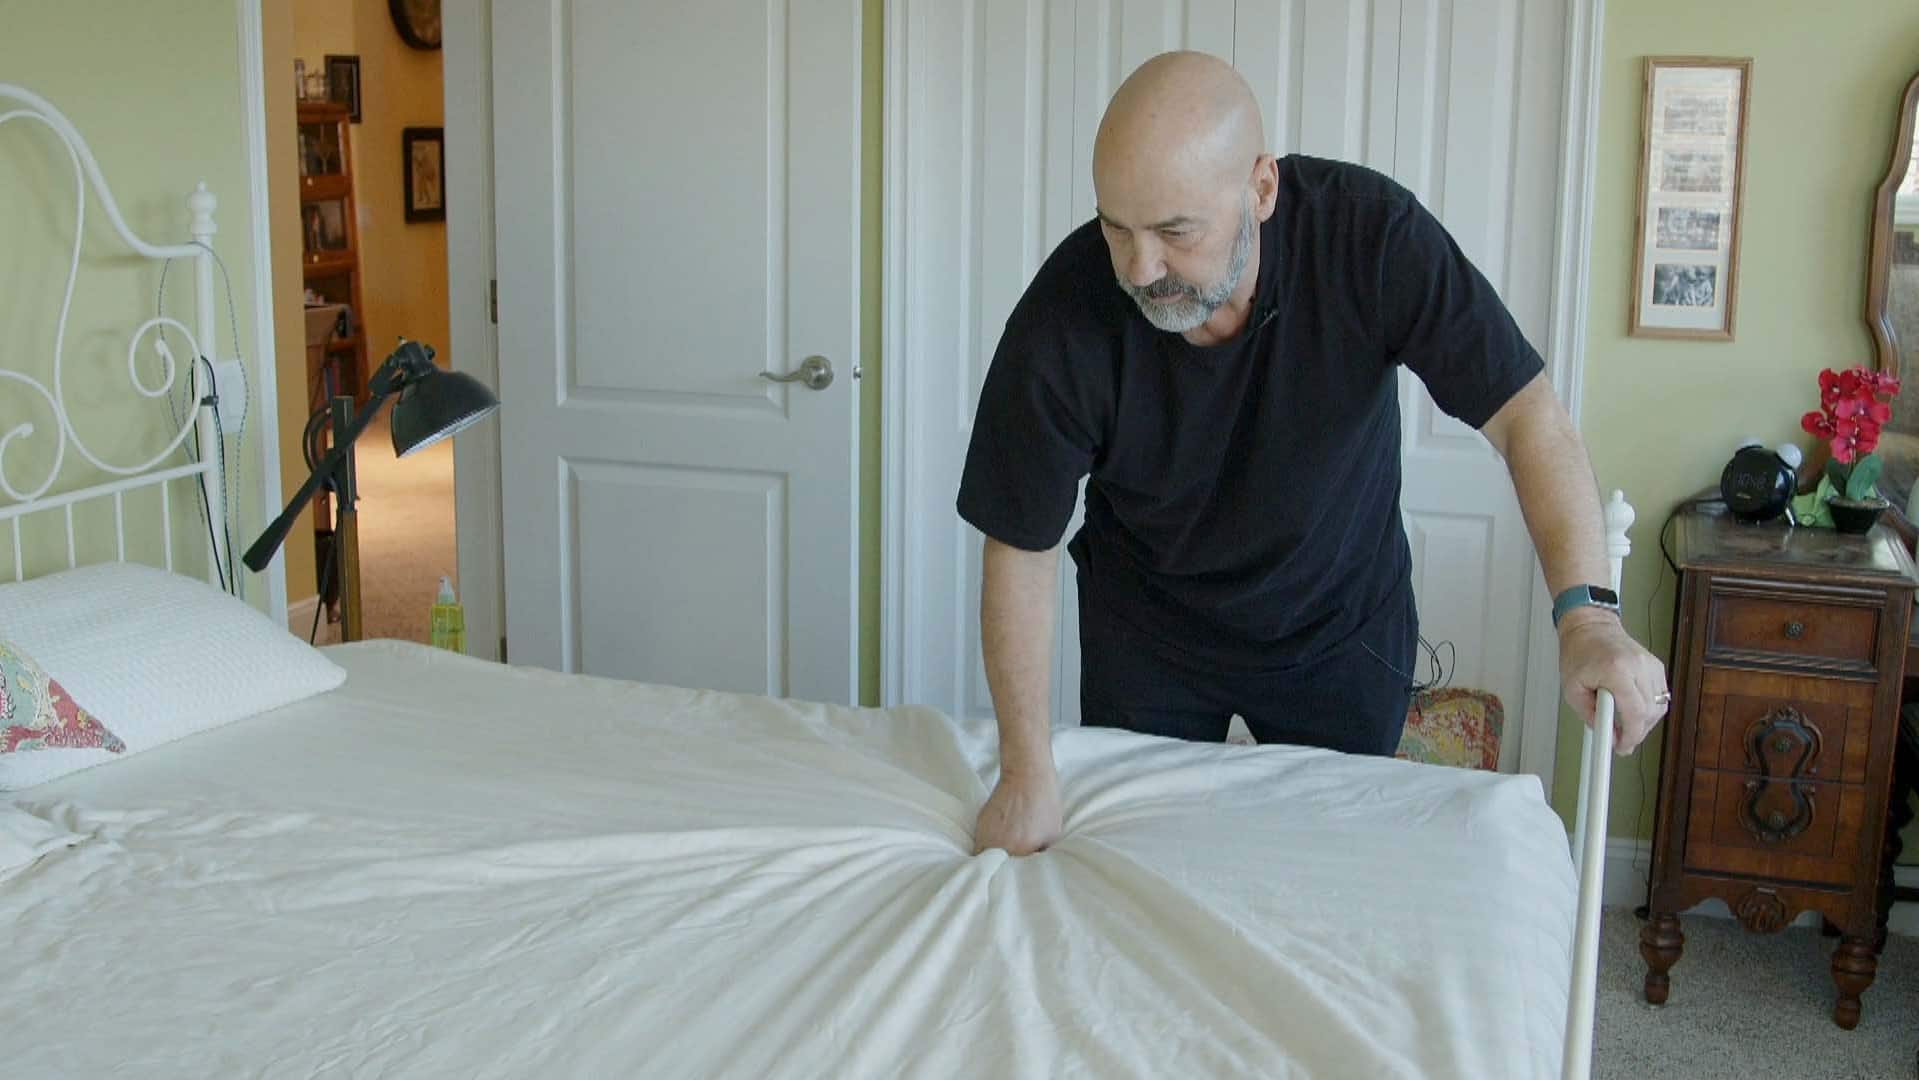 sleepless nights and no satisfaction buyers get run around returning ghostbed mattresses 3